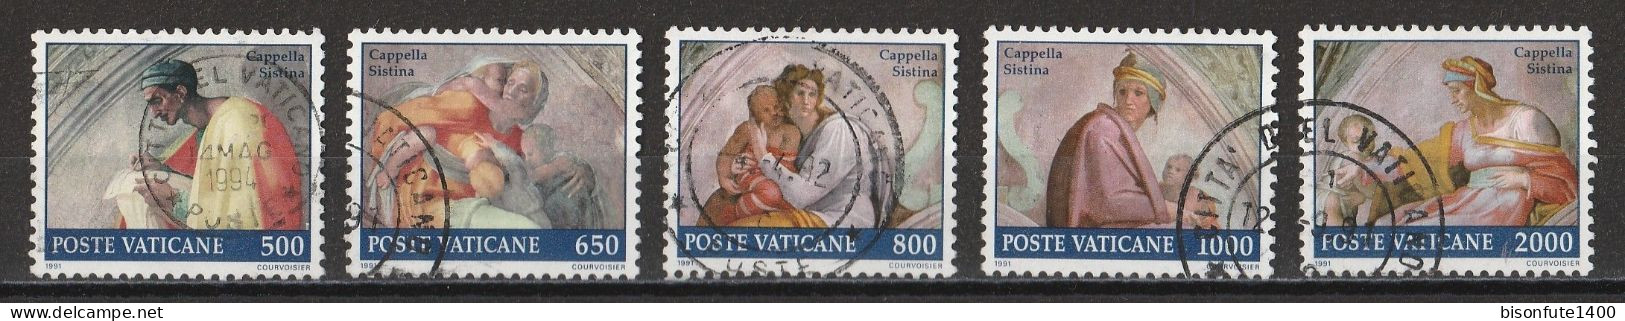 Vatican 1991 : Timbres Yvert & Tellier N° 891 - 892 - 893 - 894 - 895 - 897 - 898 - 899 - 900 Et 901 Oblitérés. - Used Stamps